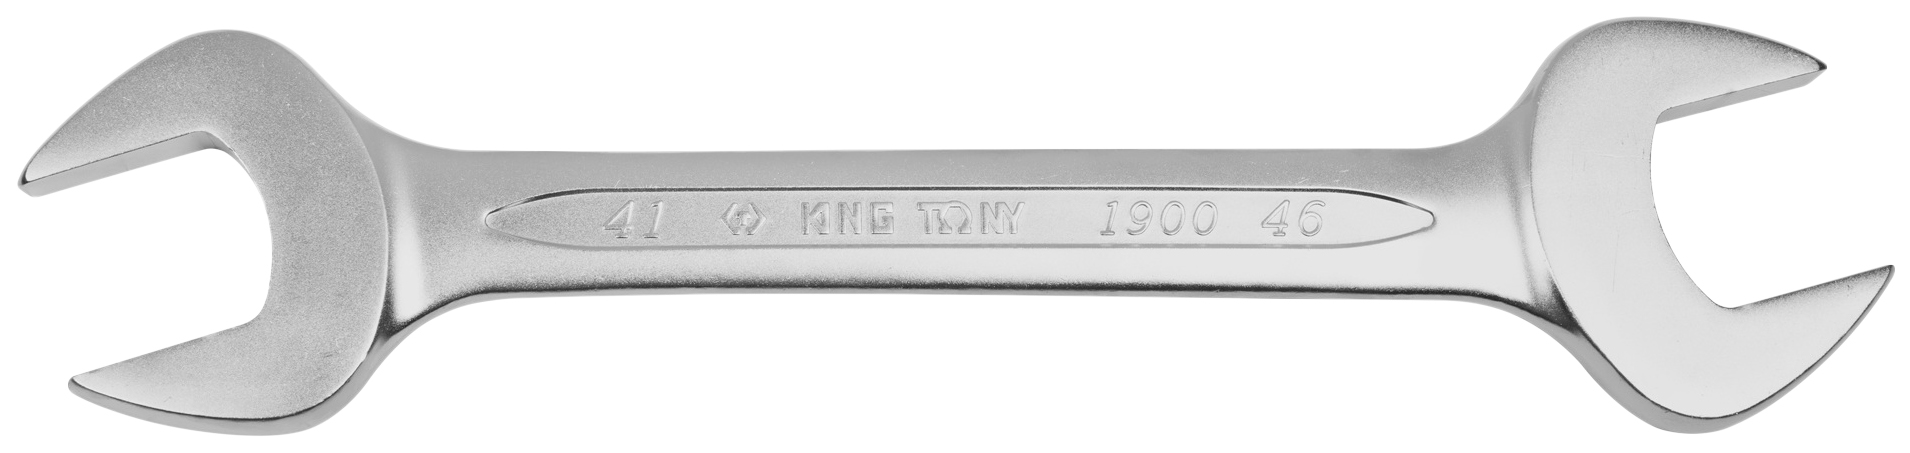 Рожковый ключ KING TONY 19004146 переставной захват ключ king tony